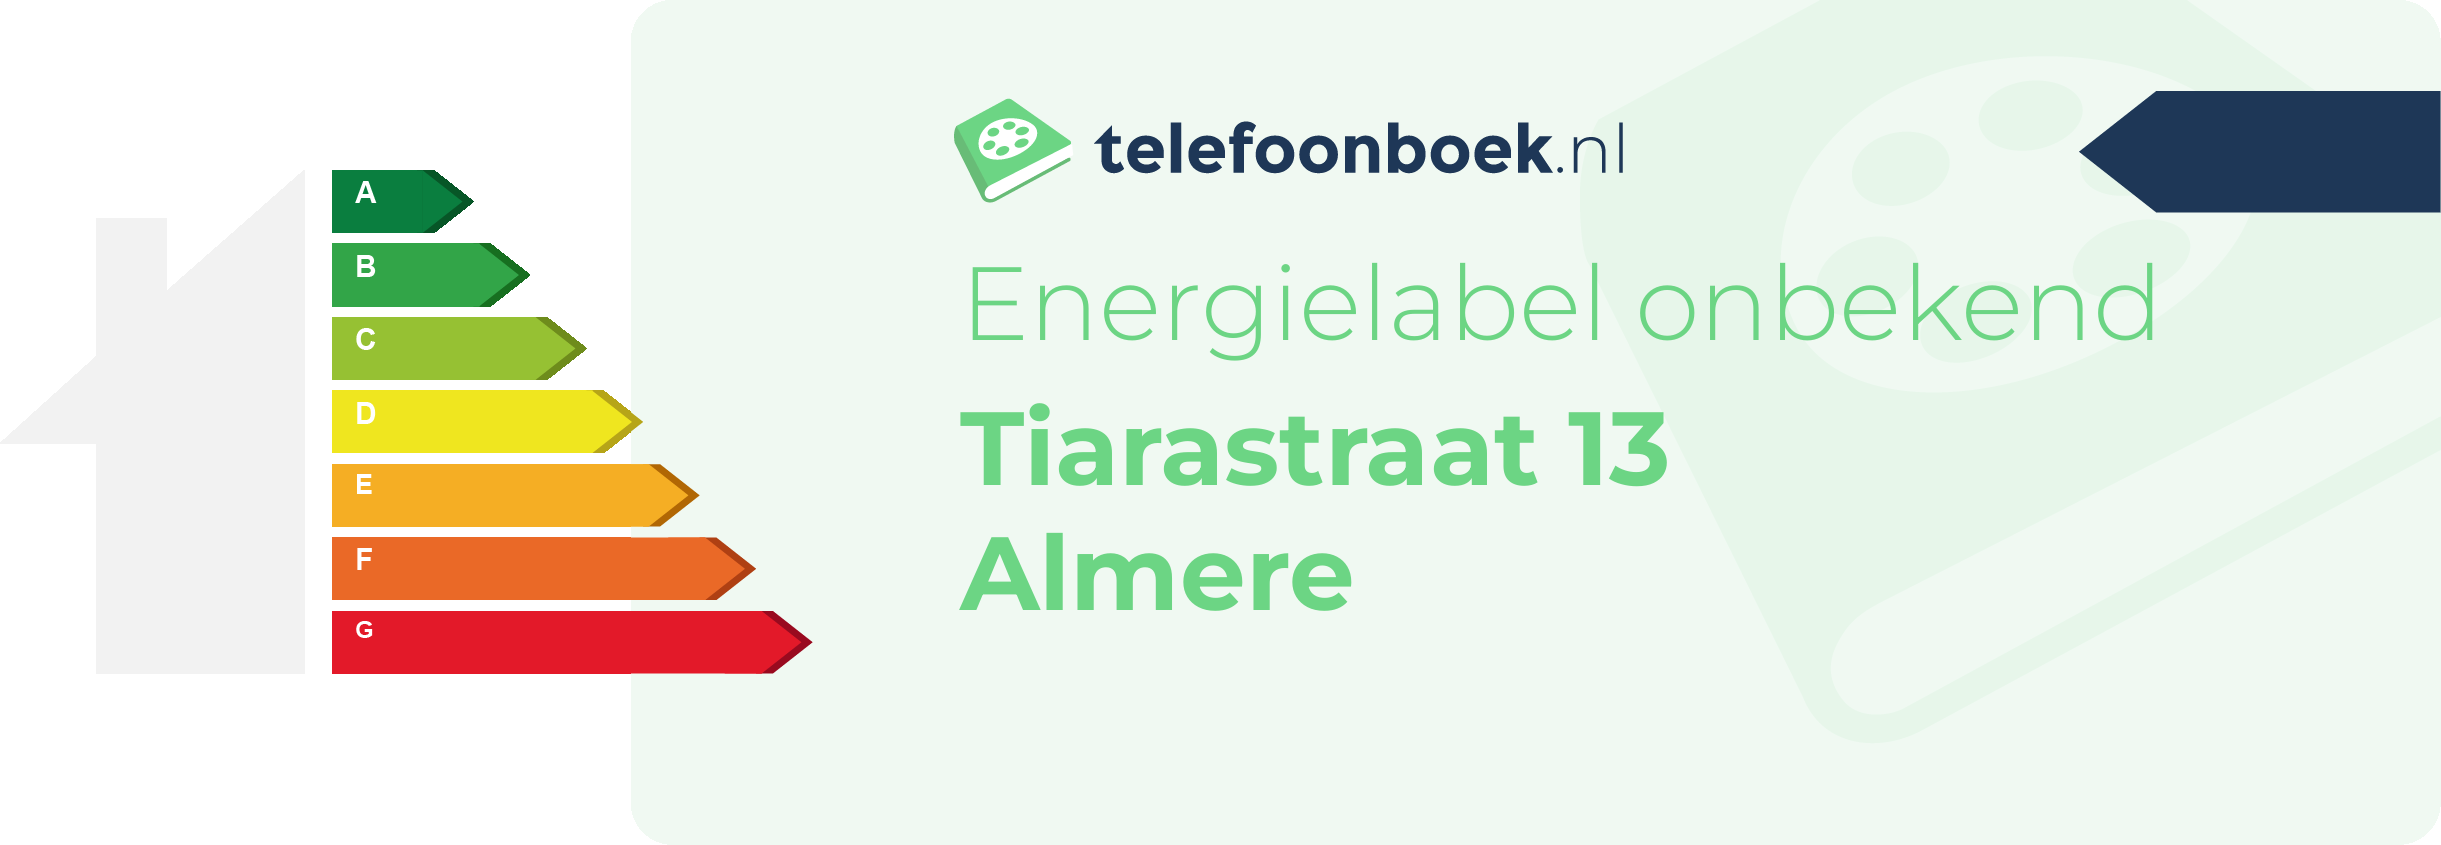 Energielabel Tiarastraat 13 Almere